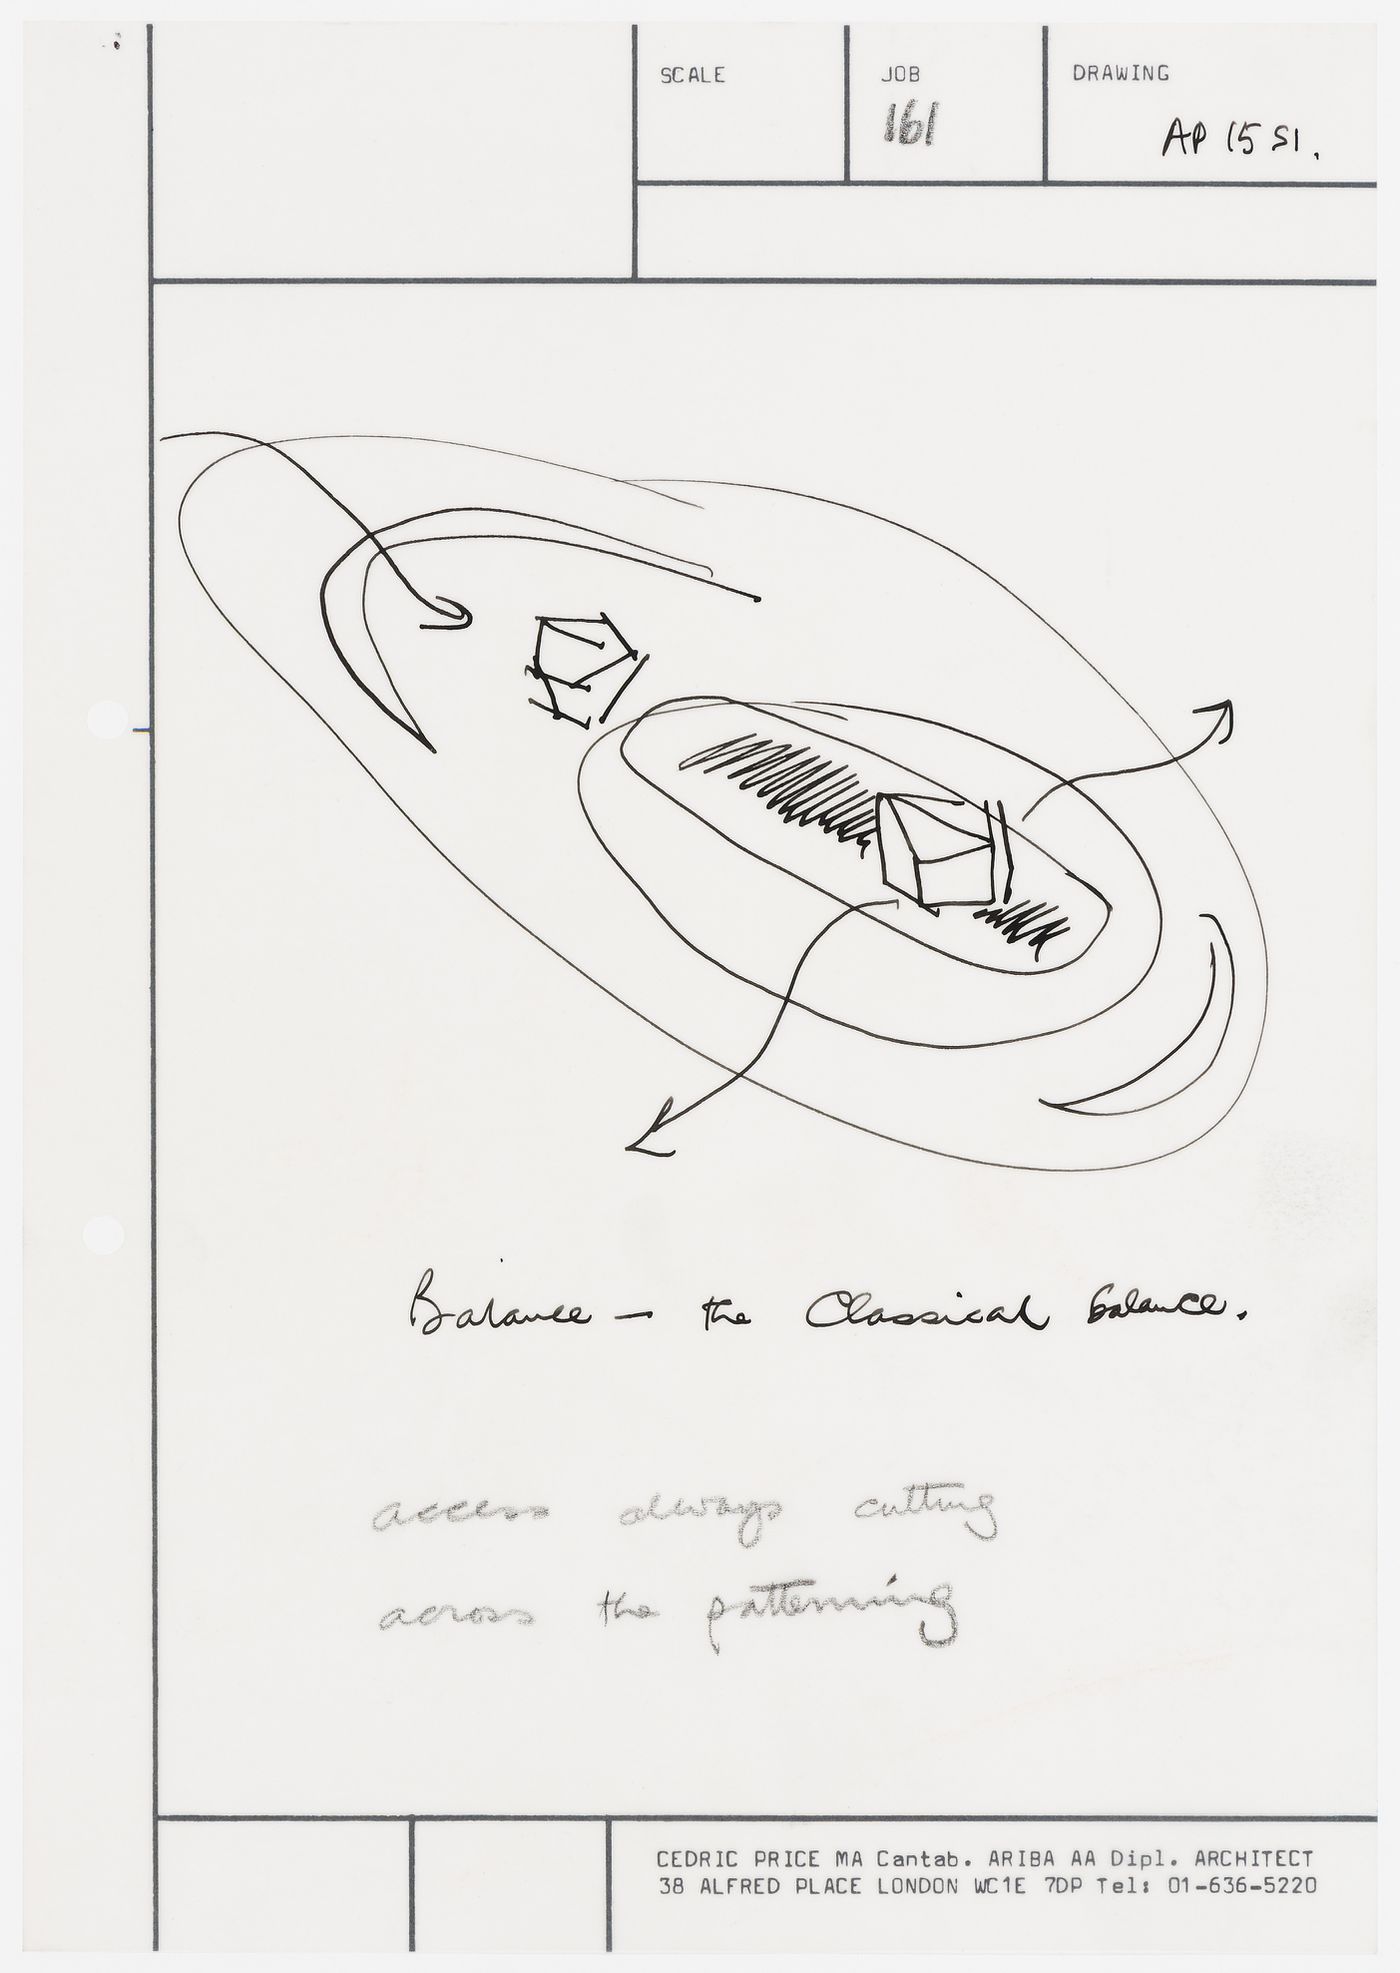 Perthpavs: conceptual sketch illustrating "the classical balance"